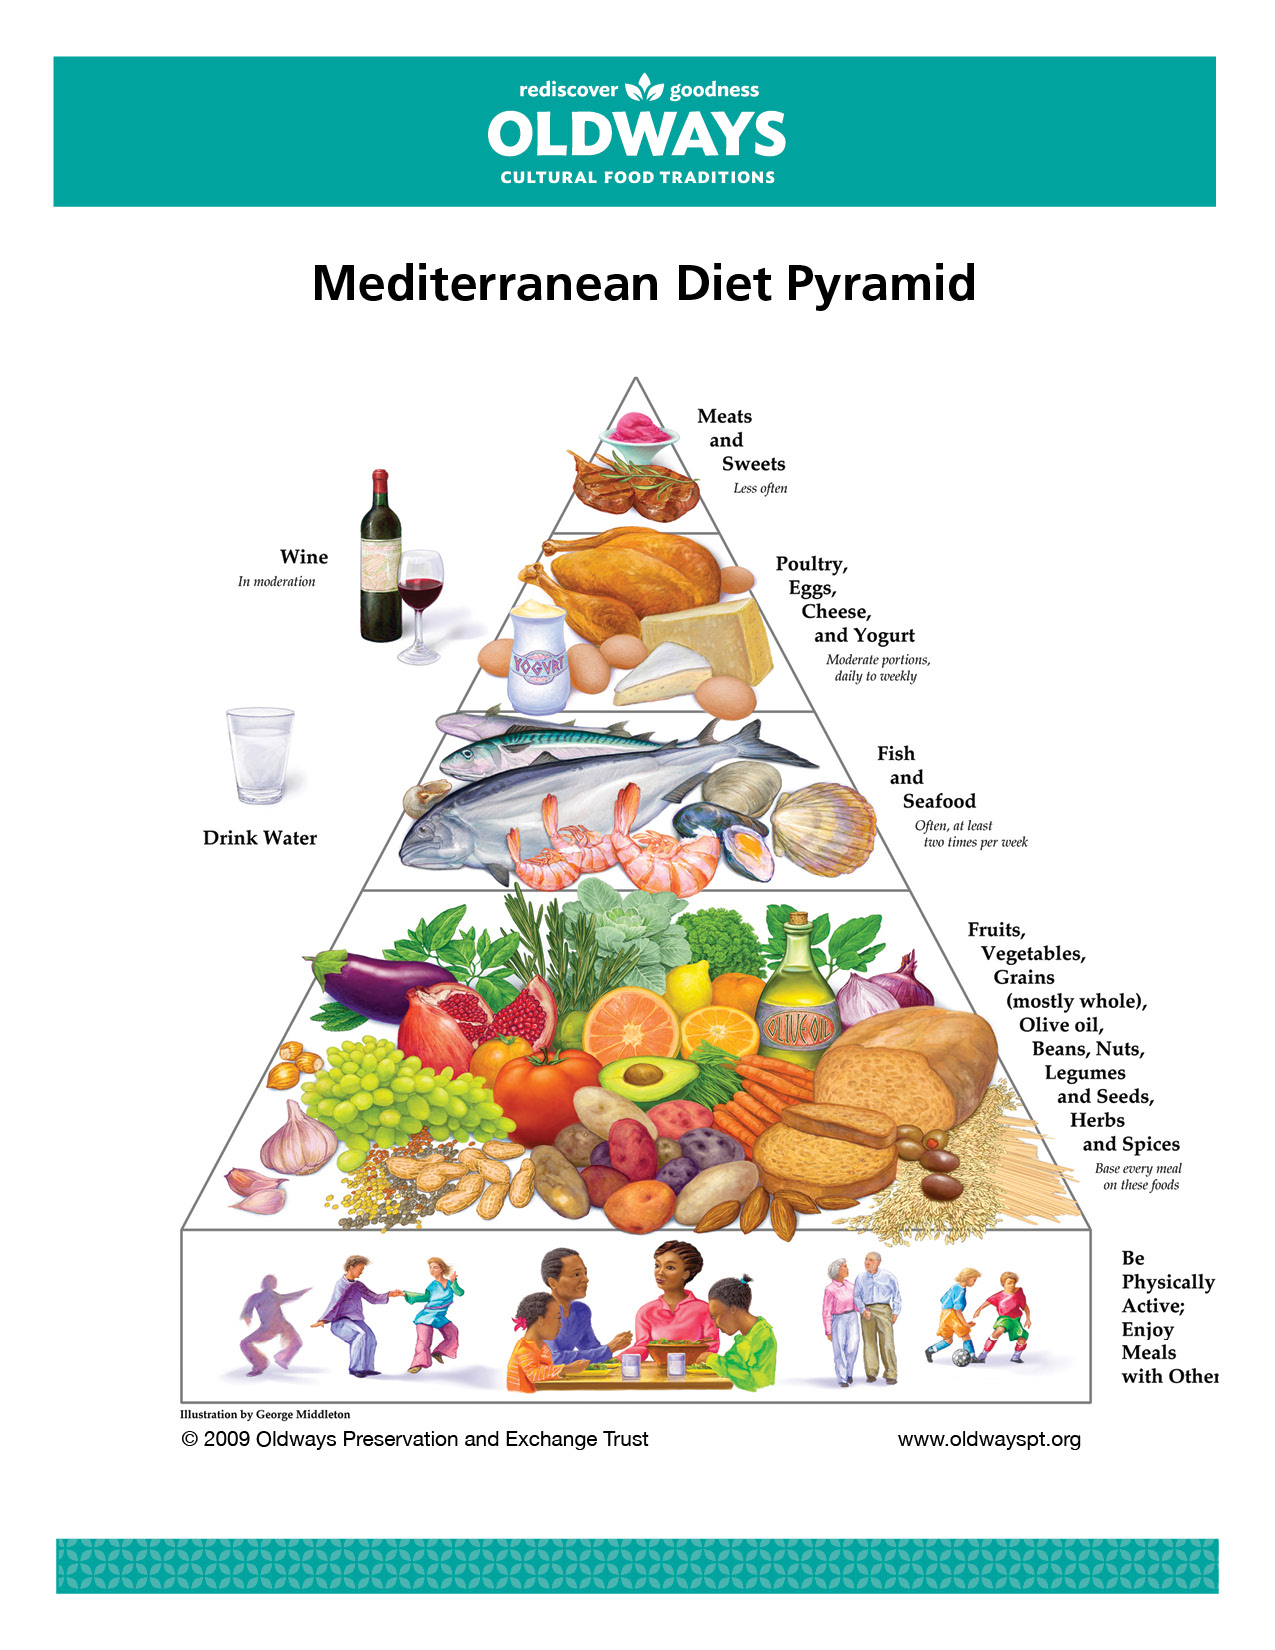 Top 10 Mediterranean Foods You Should Be Eating